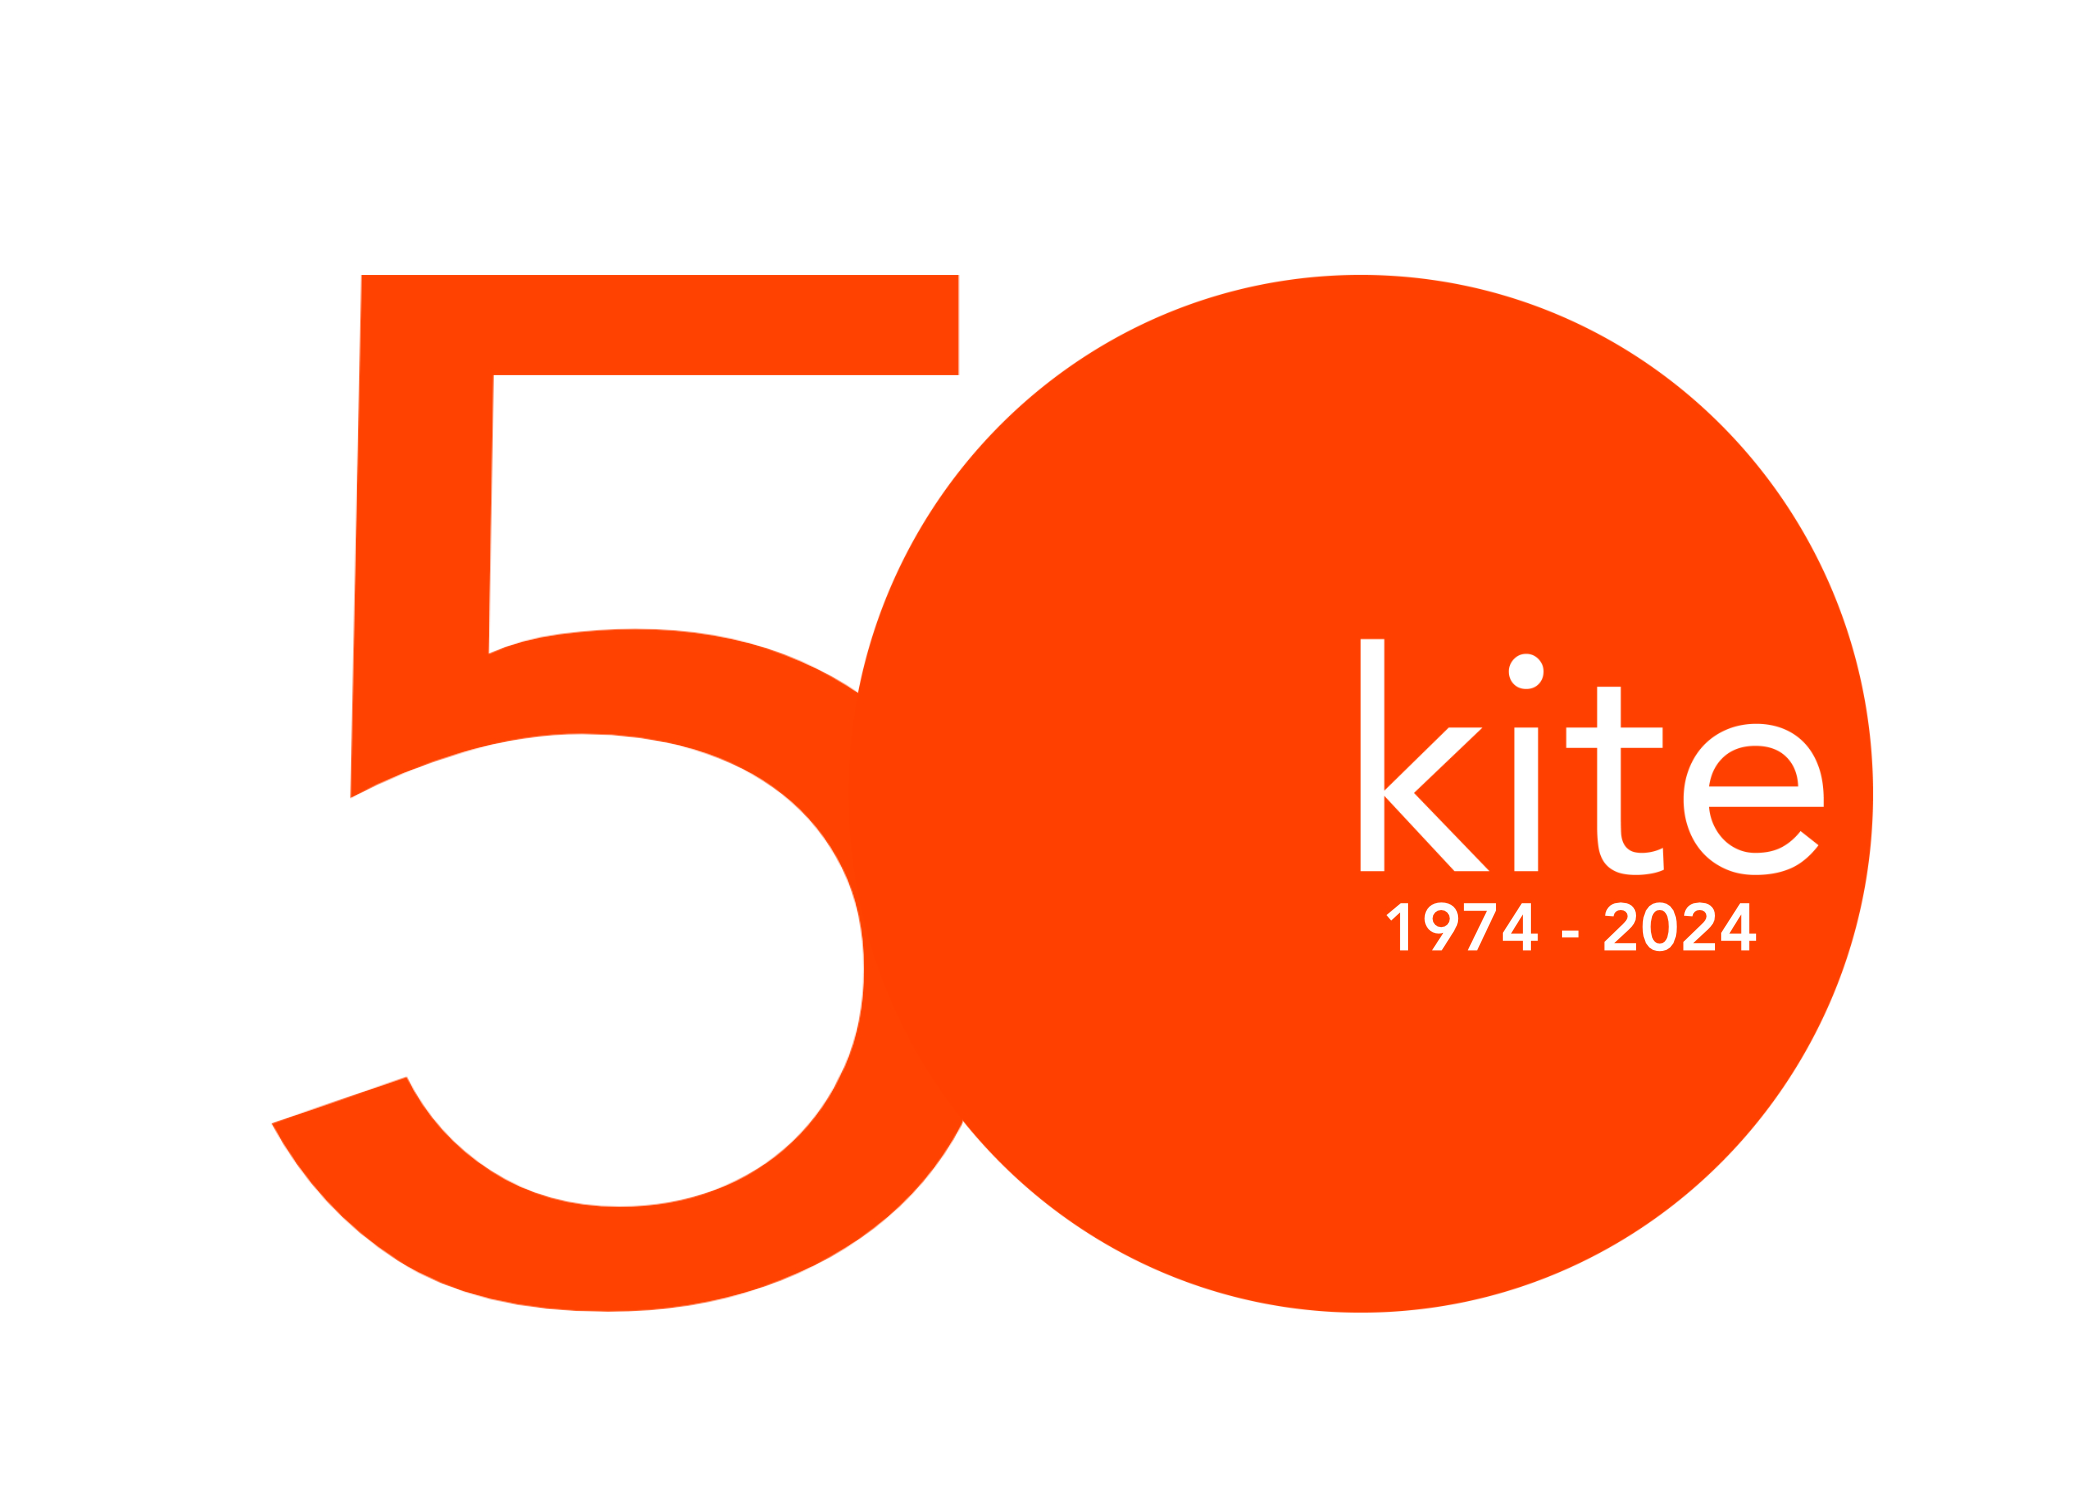 KK-Kite Architects